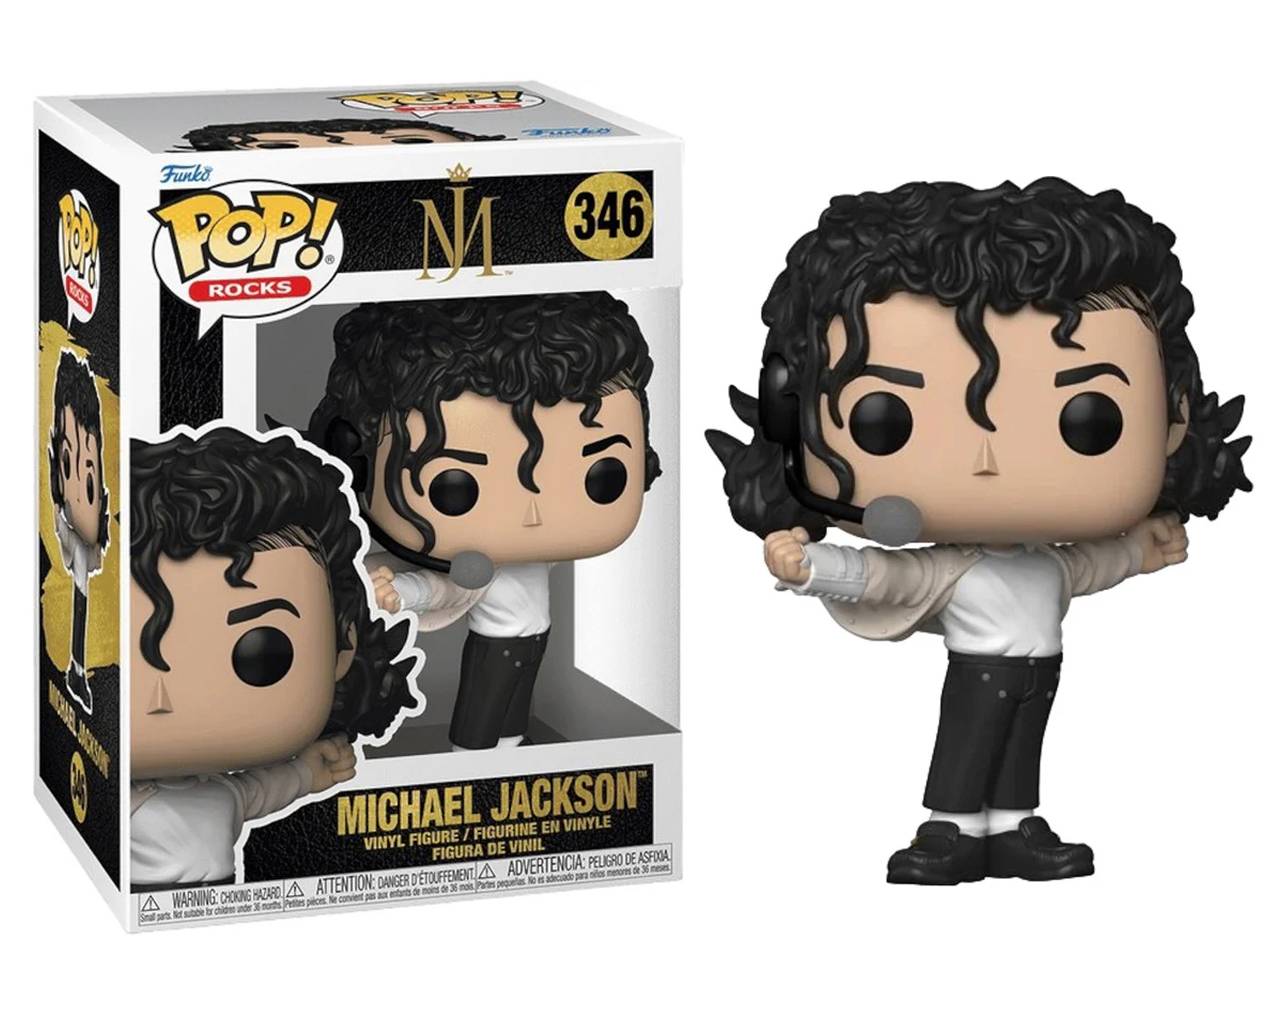 Michael Jackson (1993 Super Bowl) - Michael Jackson Pop! Vinyl